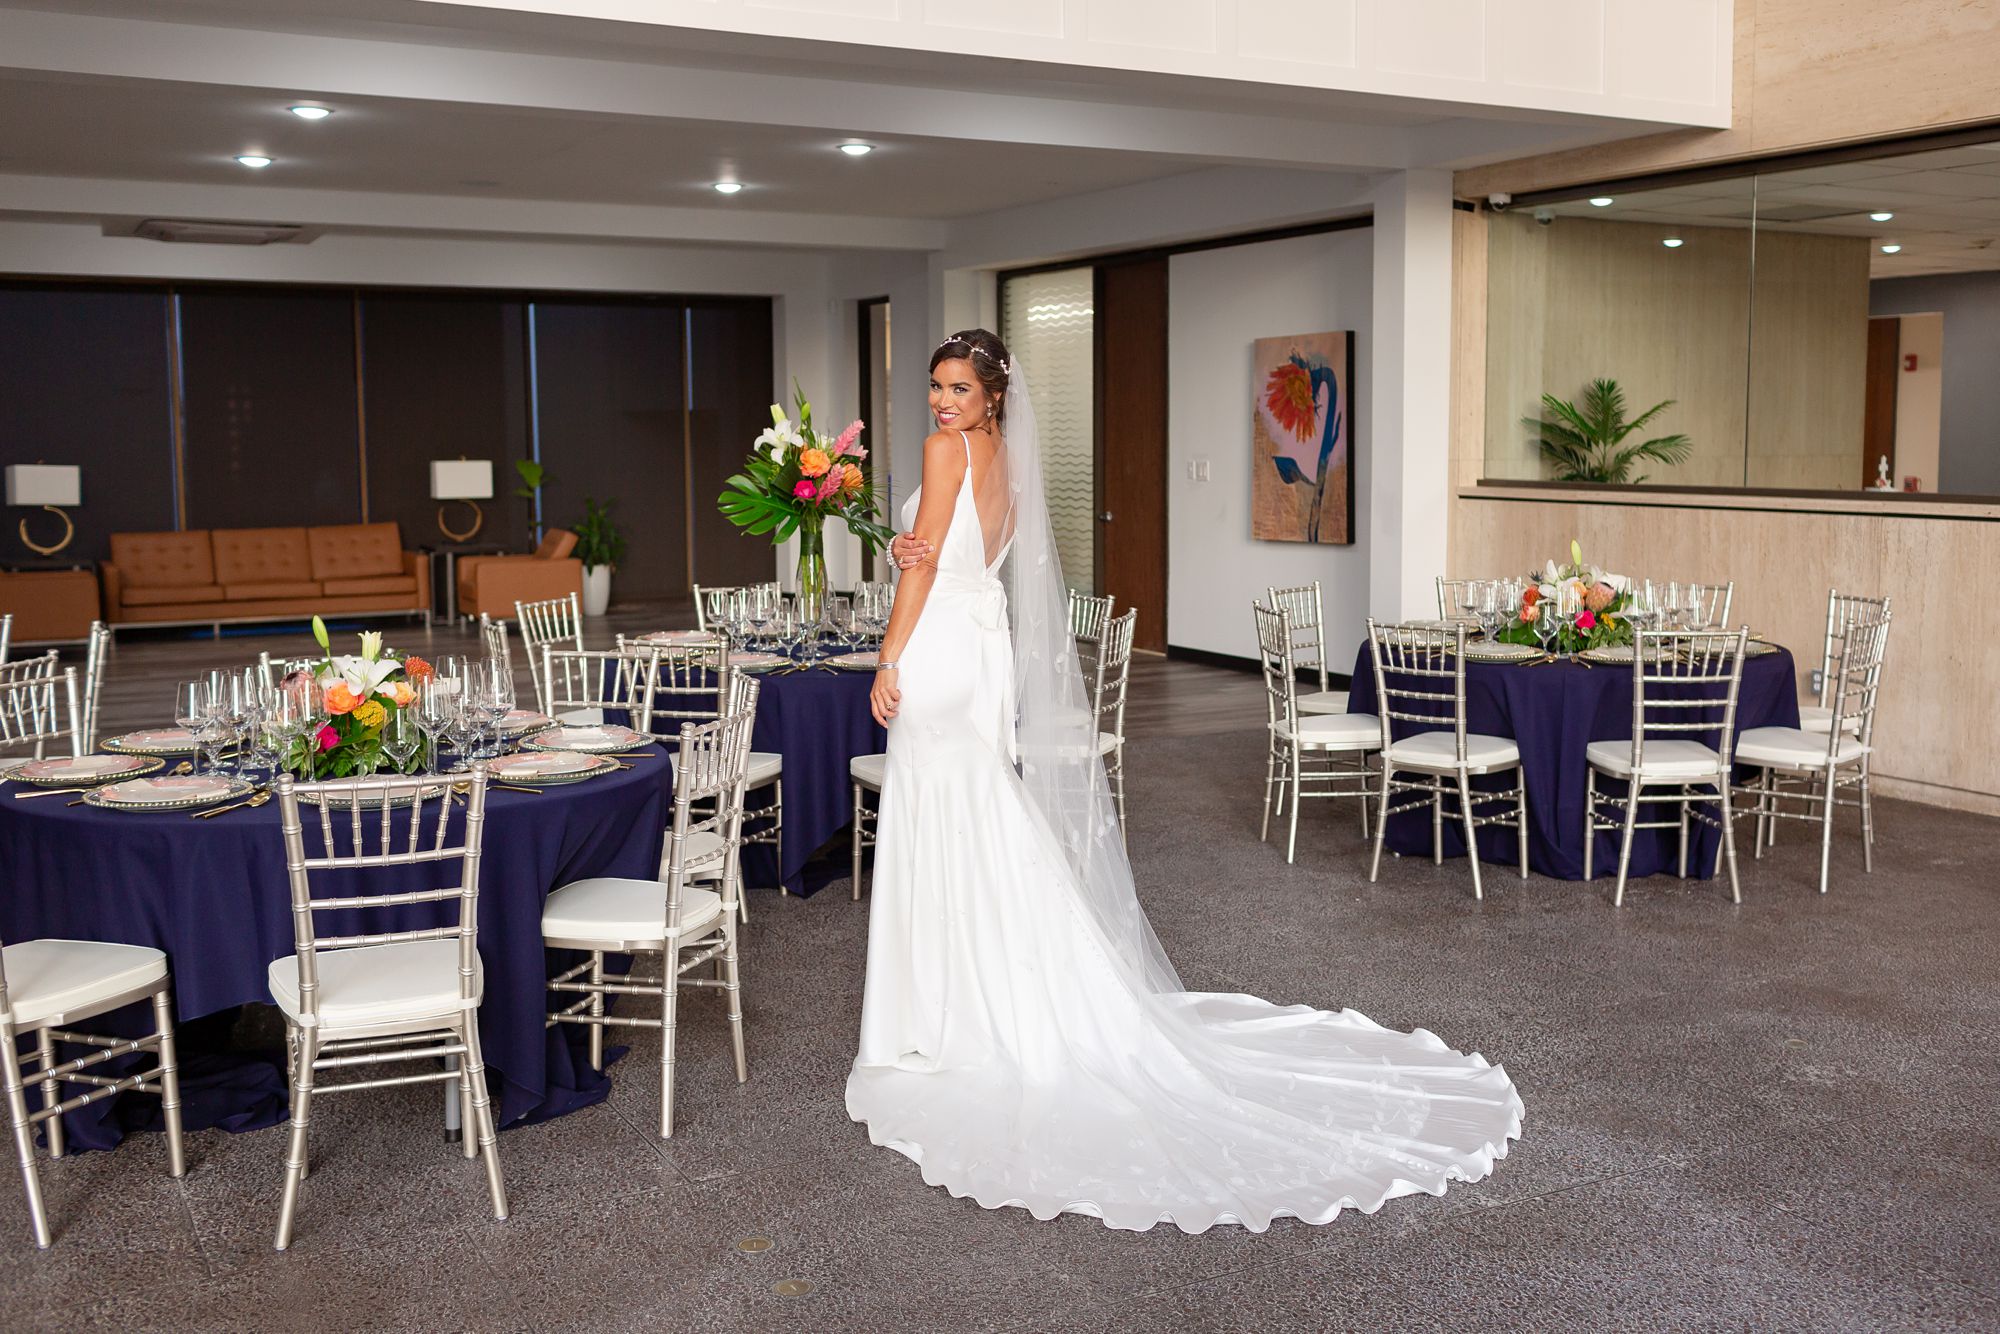 Bride inside Marmo Plaza at wedding reception.